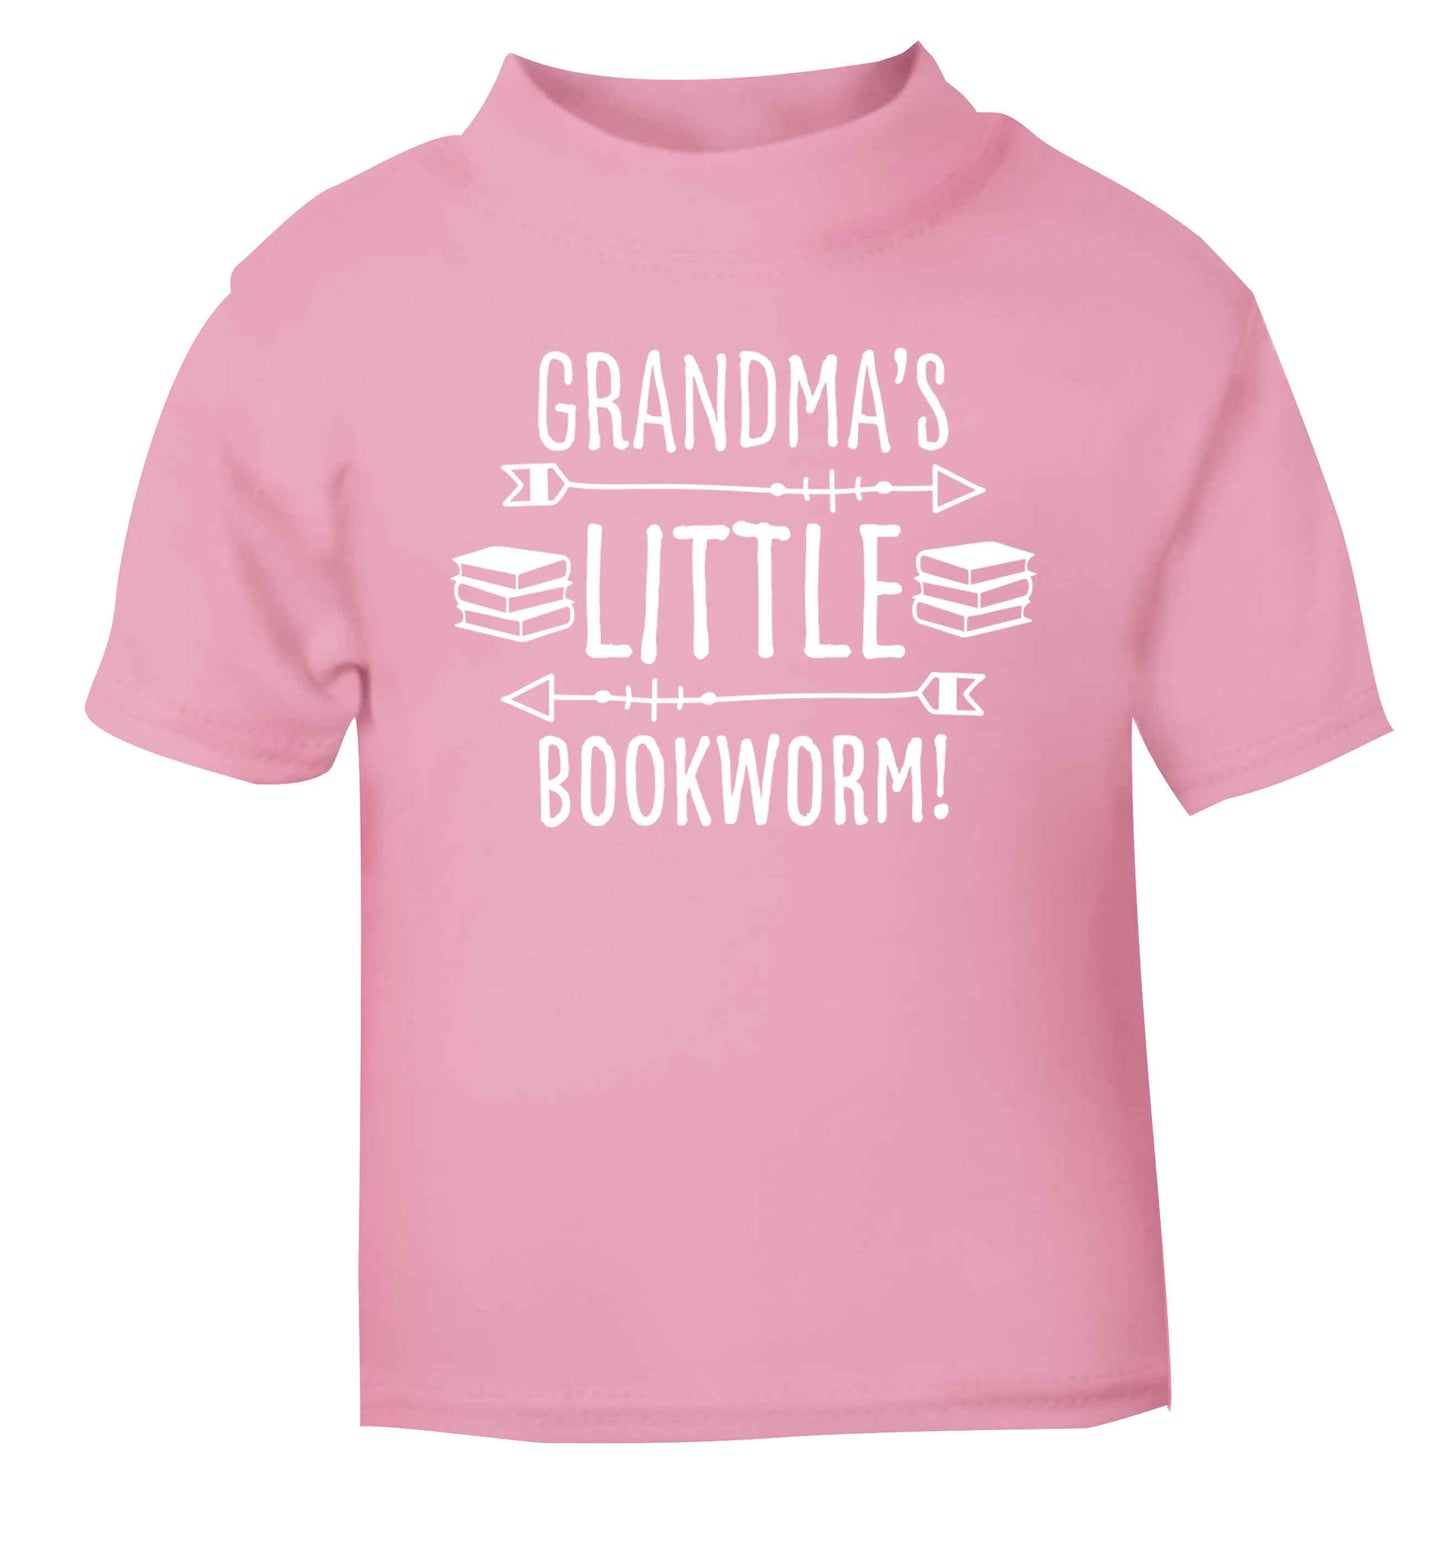 Grandma's little bookworm light pink baby toddler Tshirt 2 Years